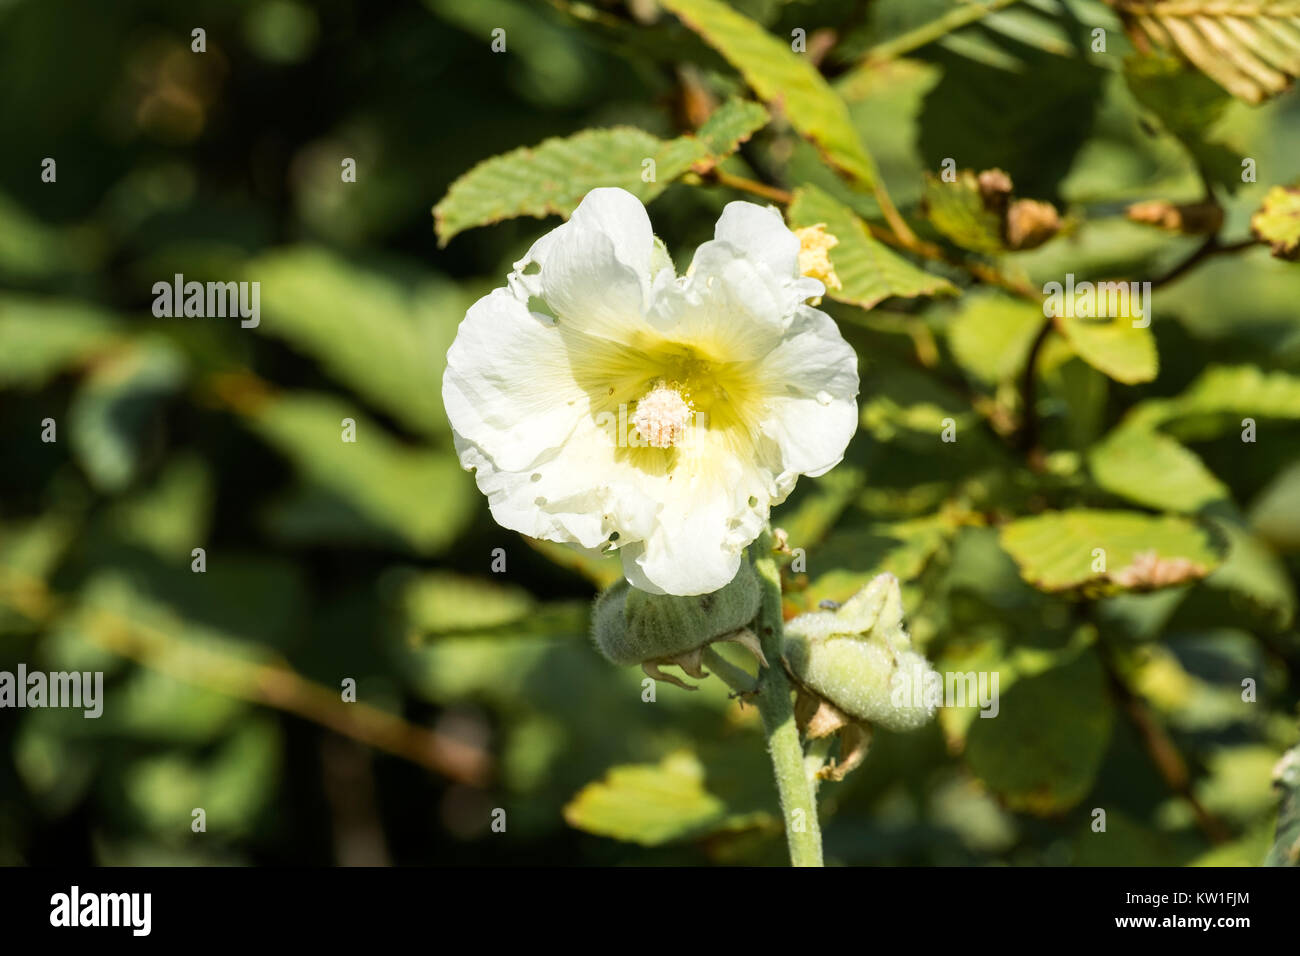 Flower of White hollyhock (Alcea rosea) Stock Photo